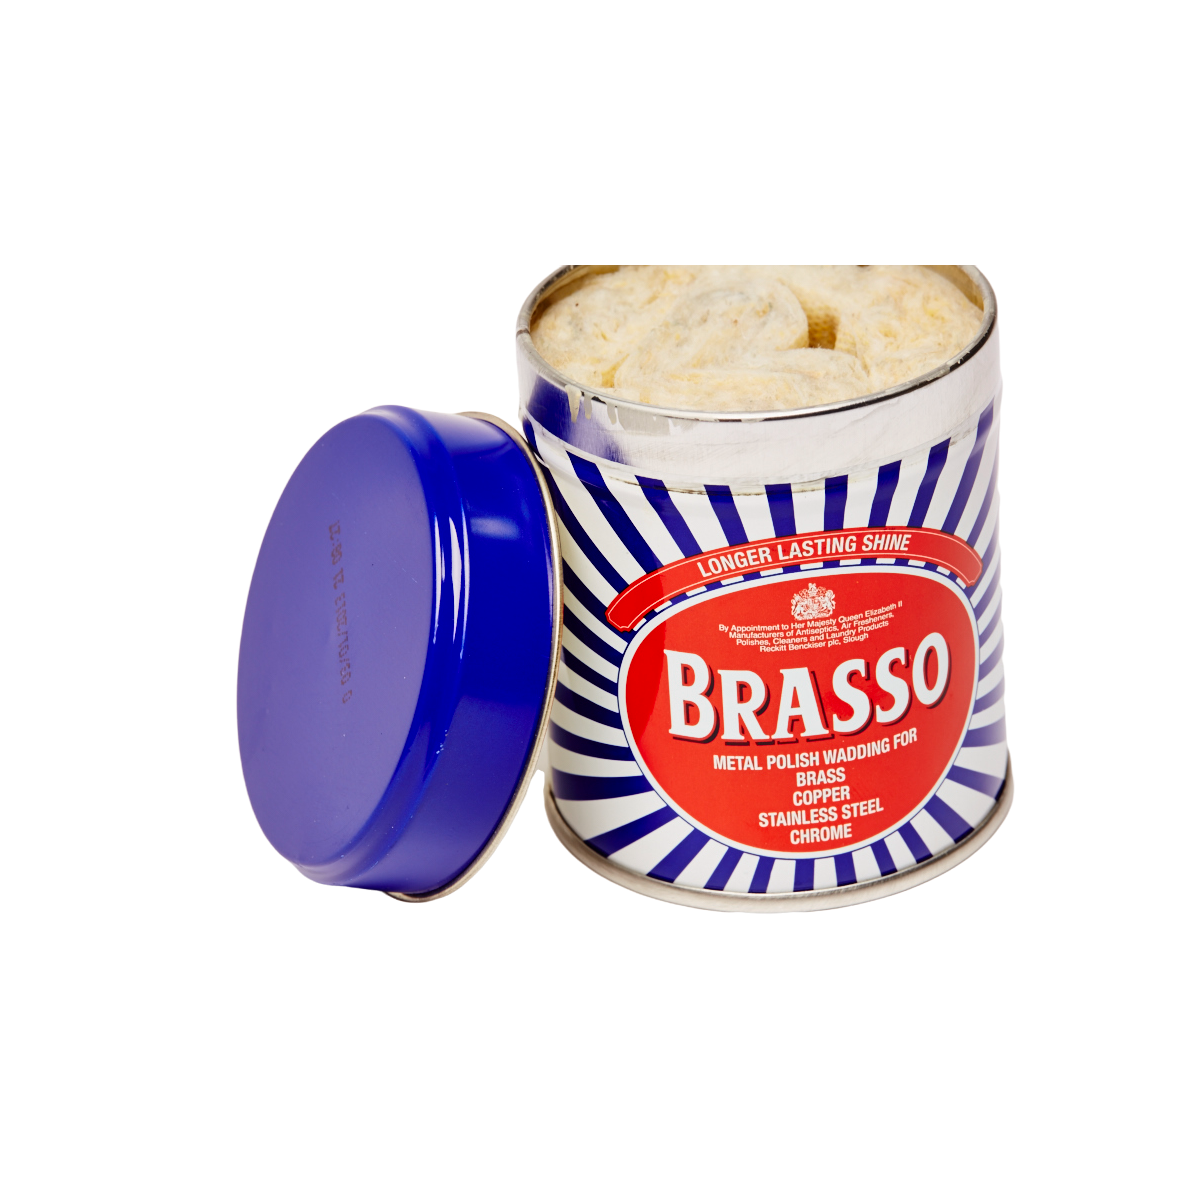 Where to Buy Brasso Wadding